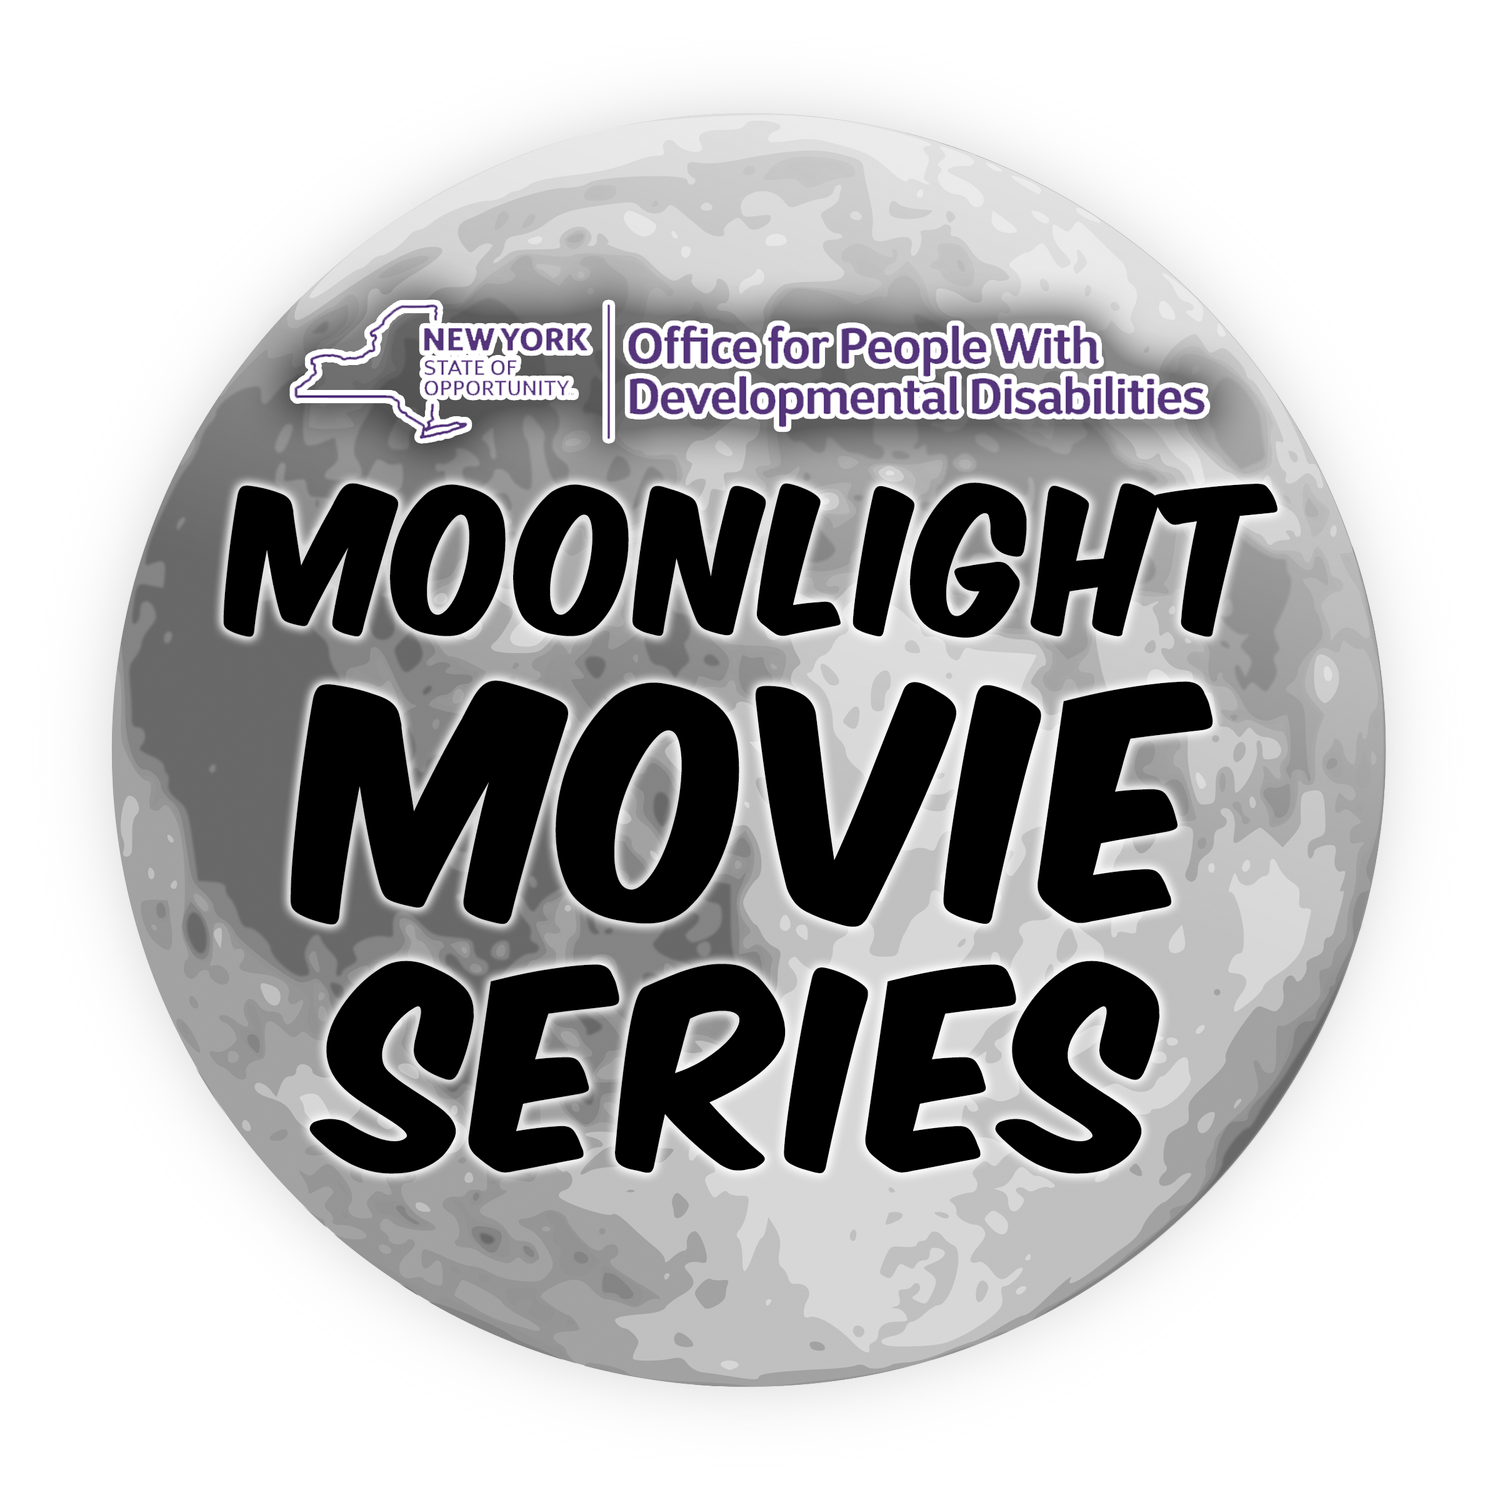 Moonlight Movie Series